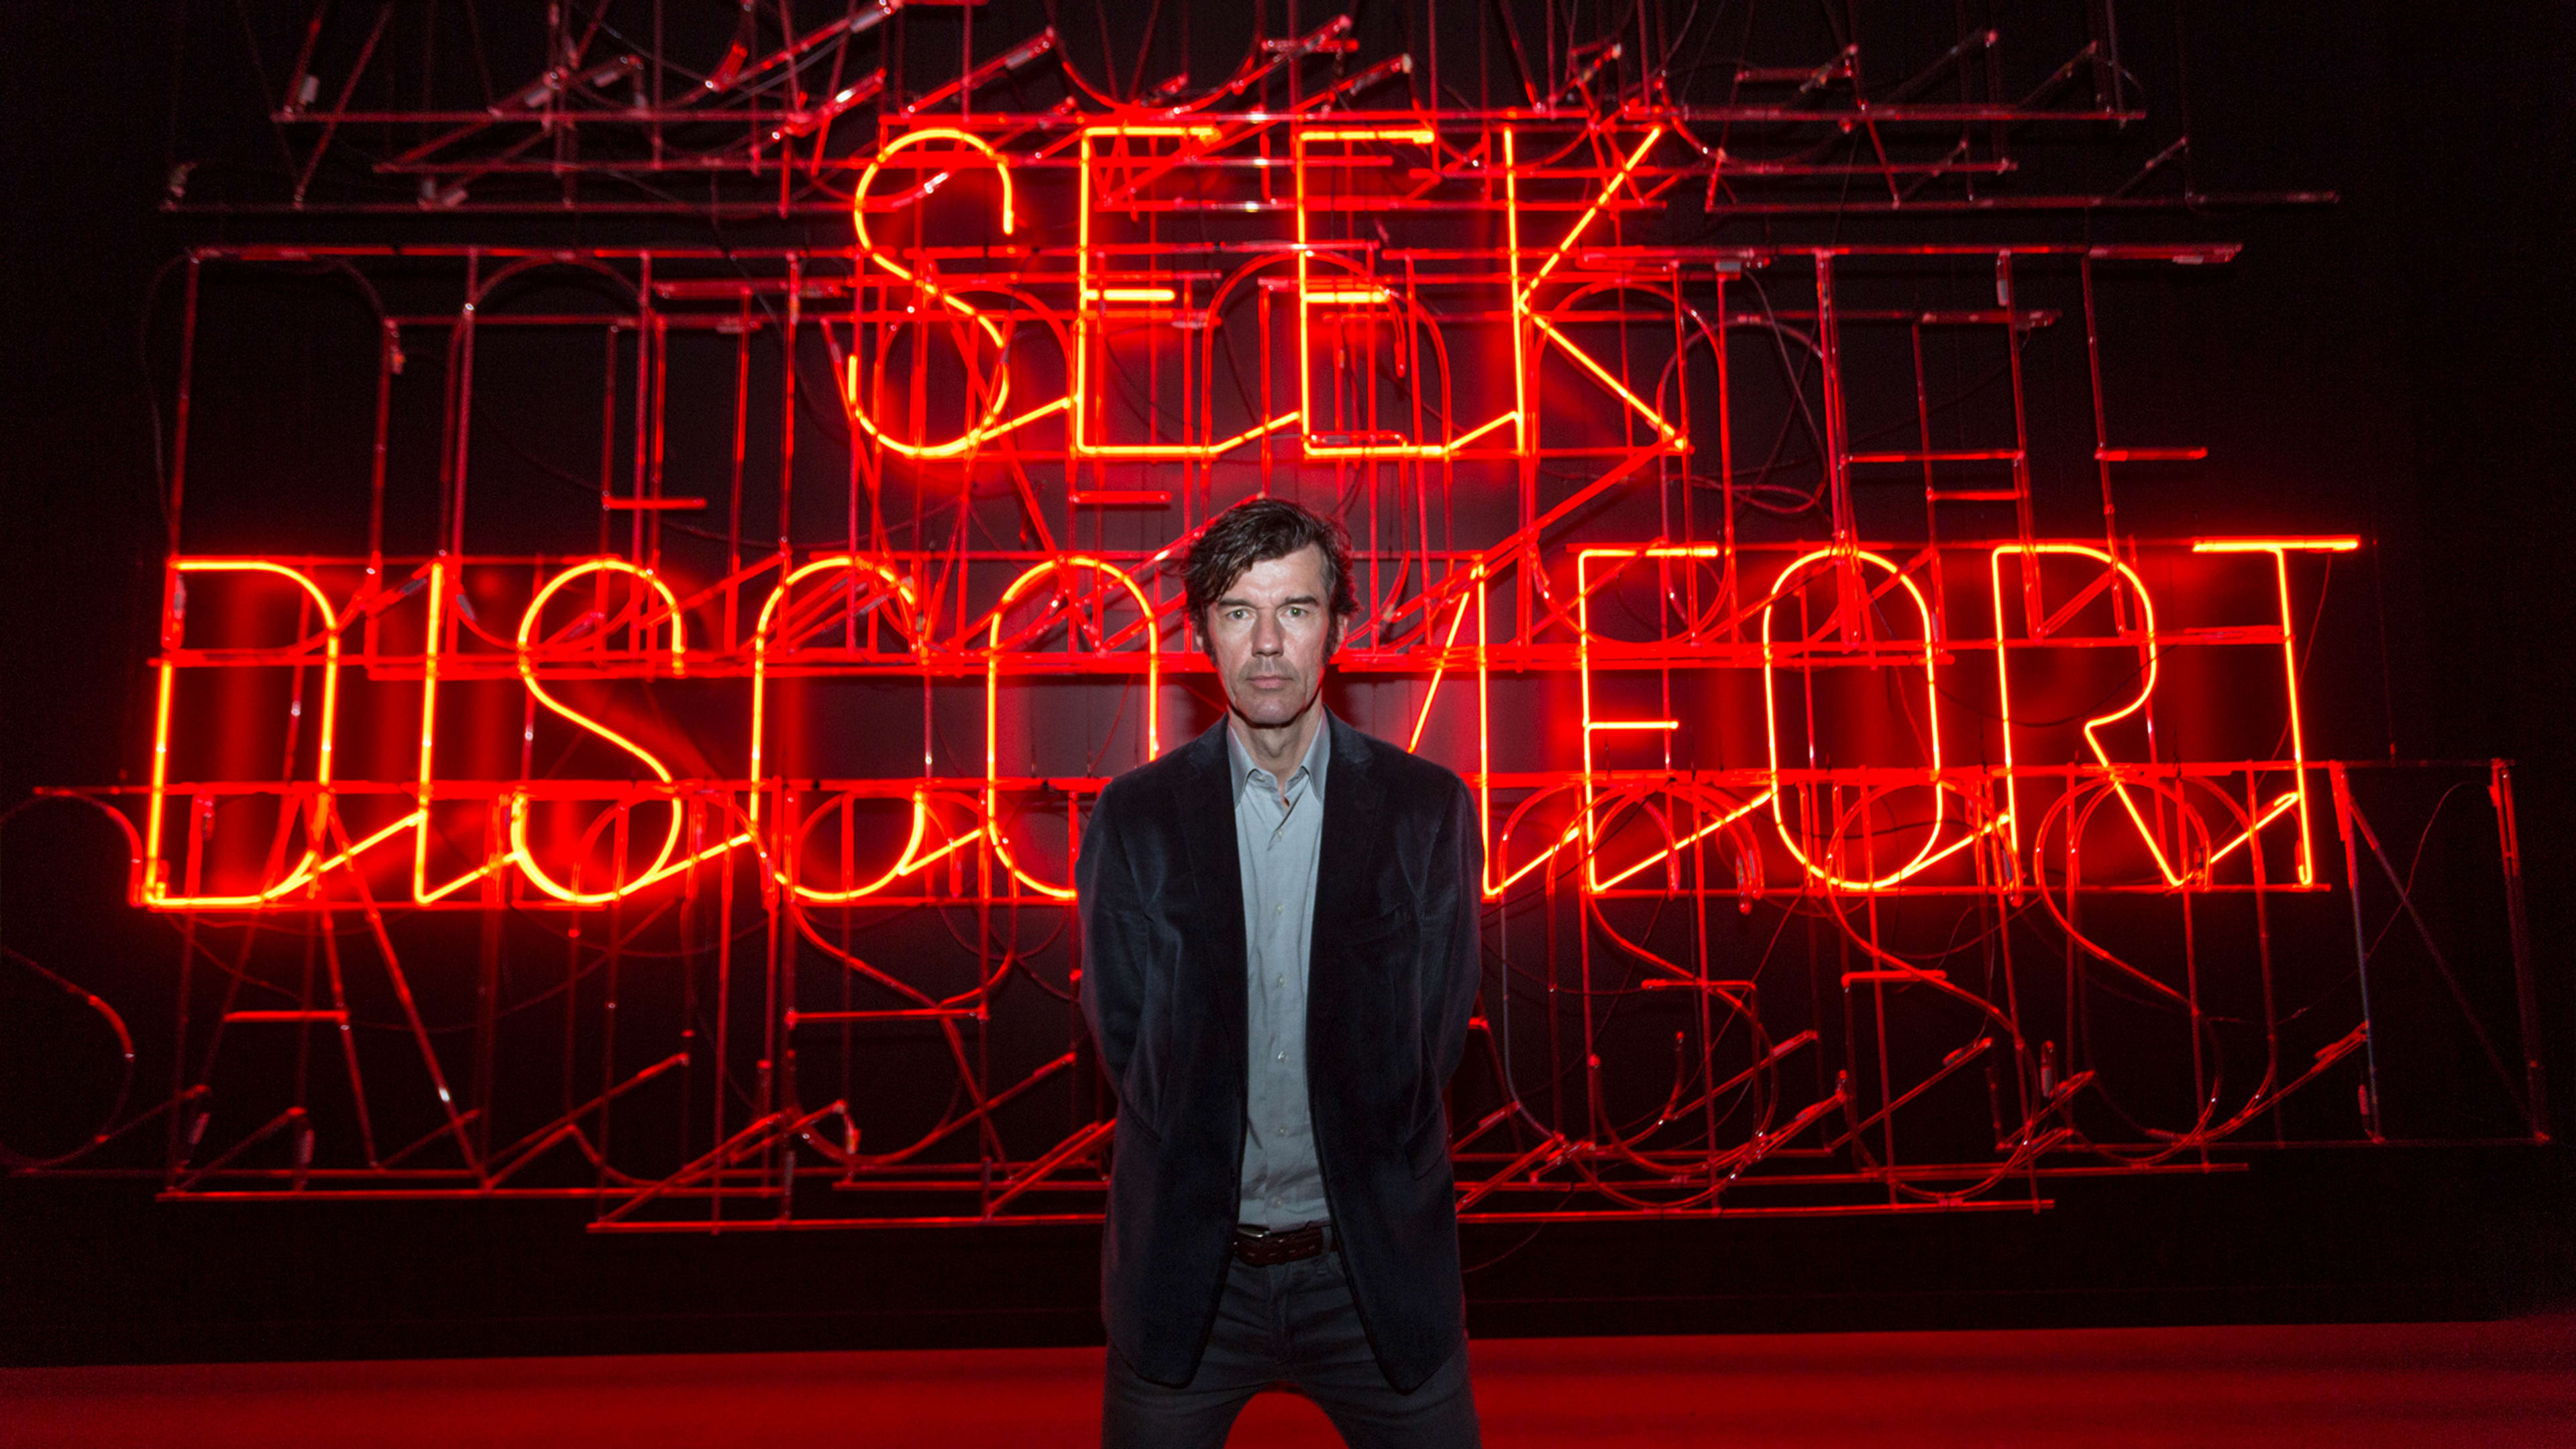 Design legend Stefan Sagmeister steps away from commercial work for good